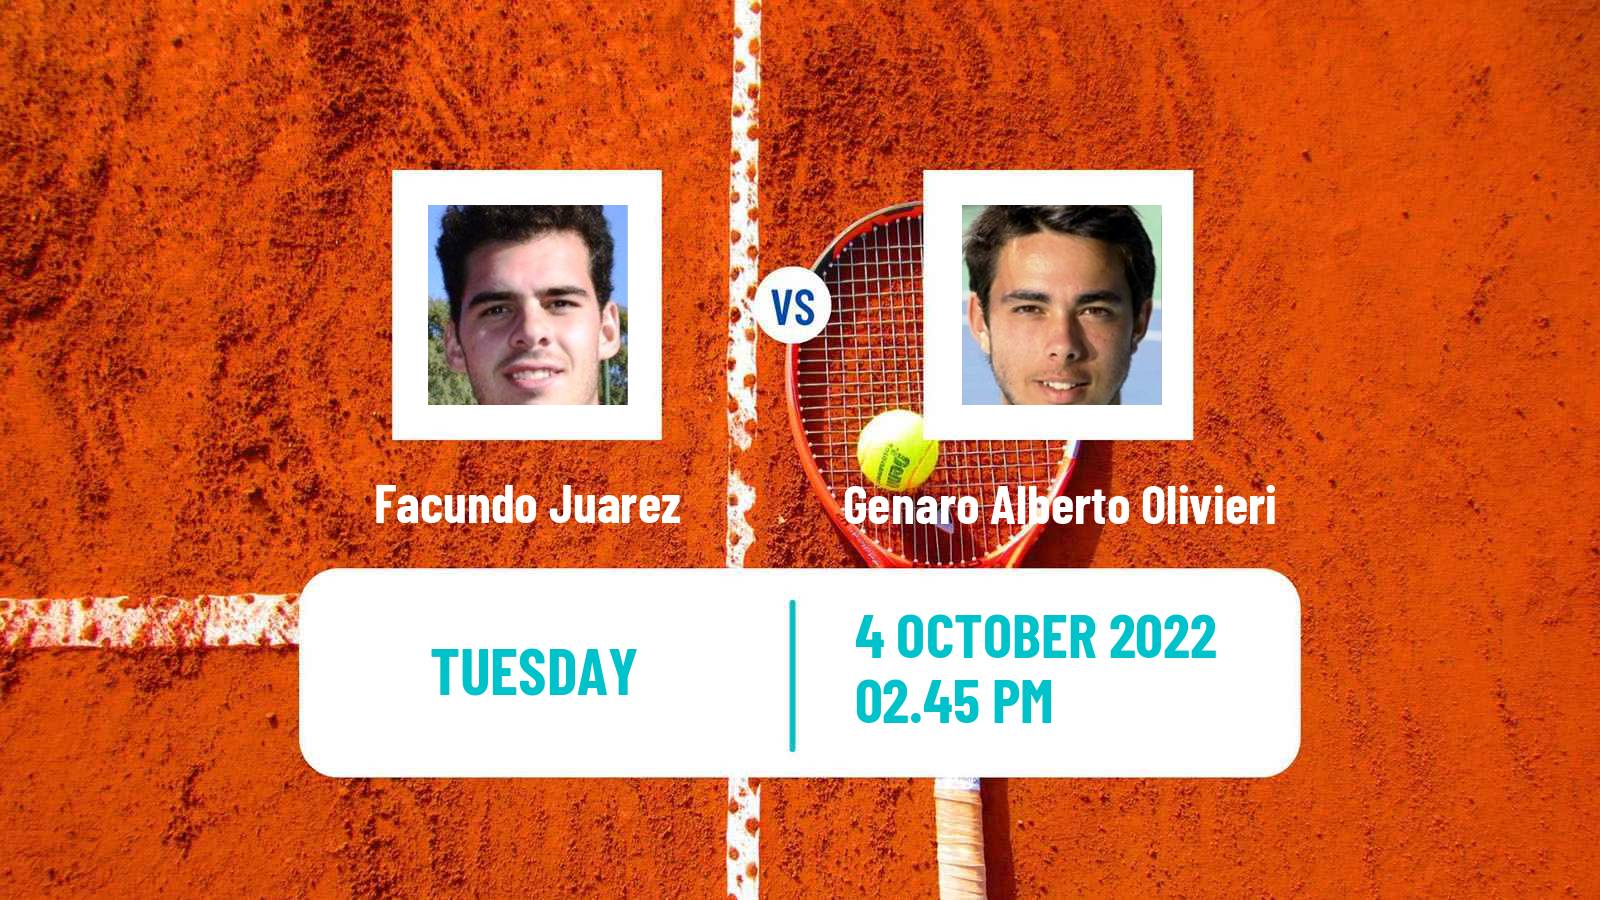 Tennis ATP Challenger Facundo Juarez - Genaro Alberto Olivieri